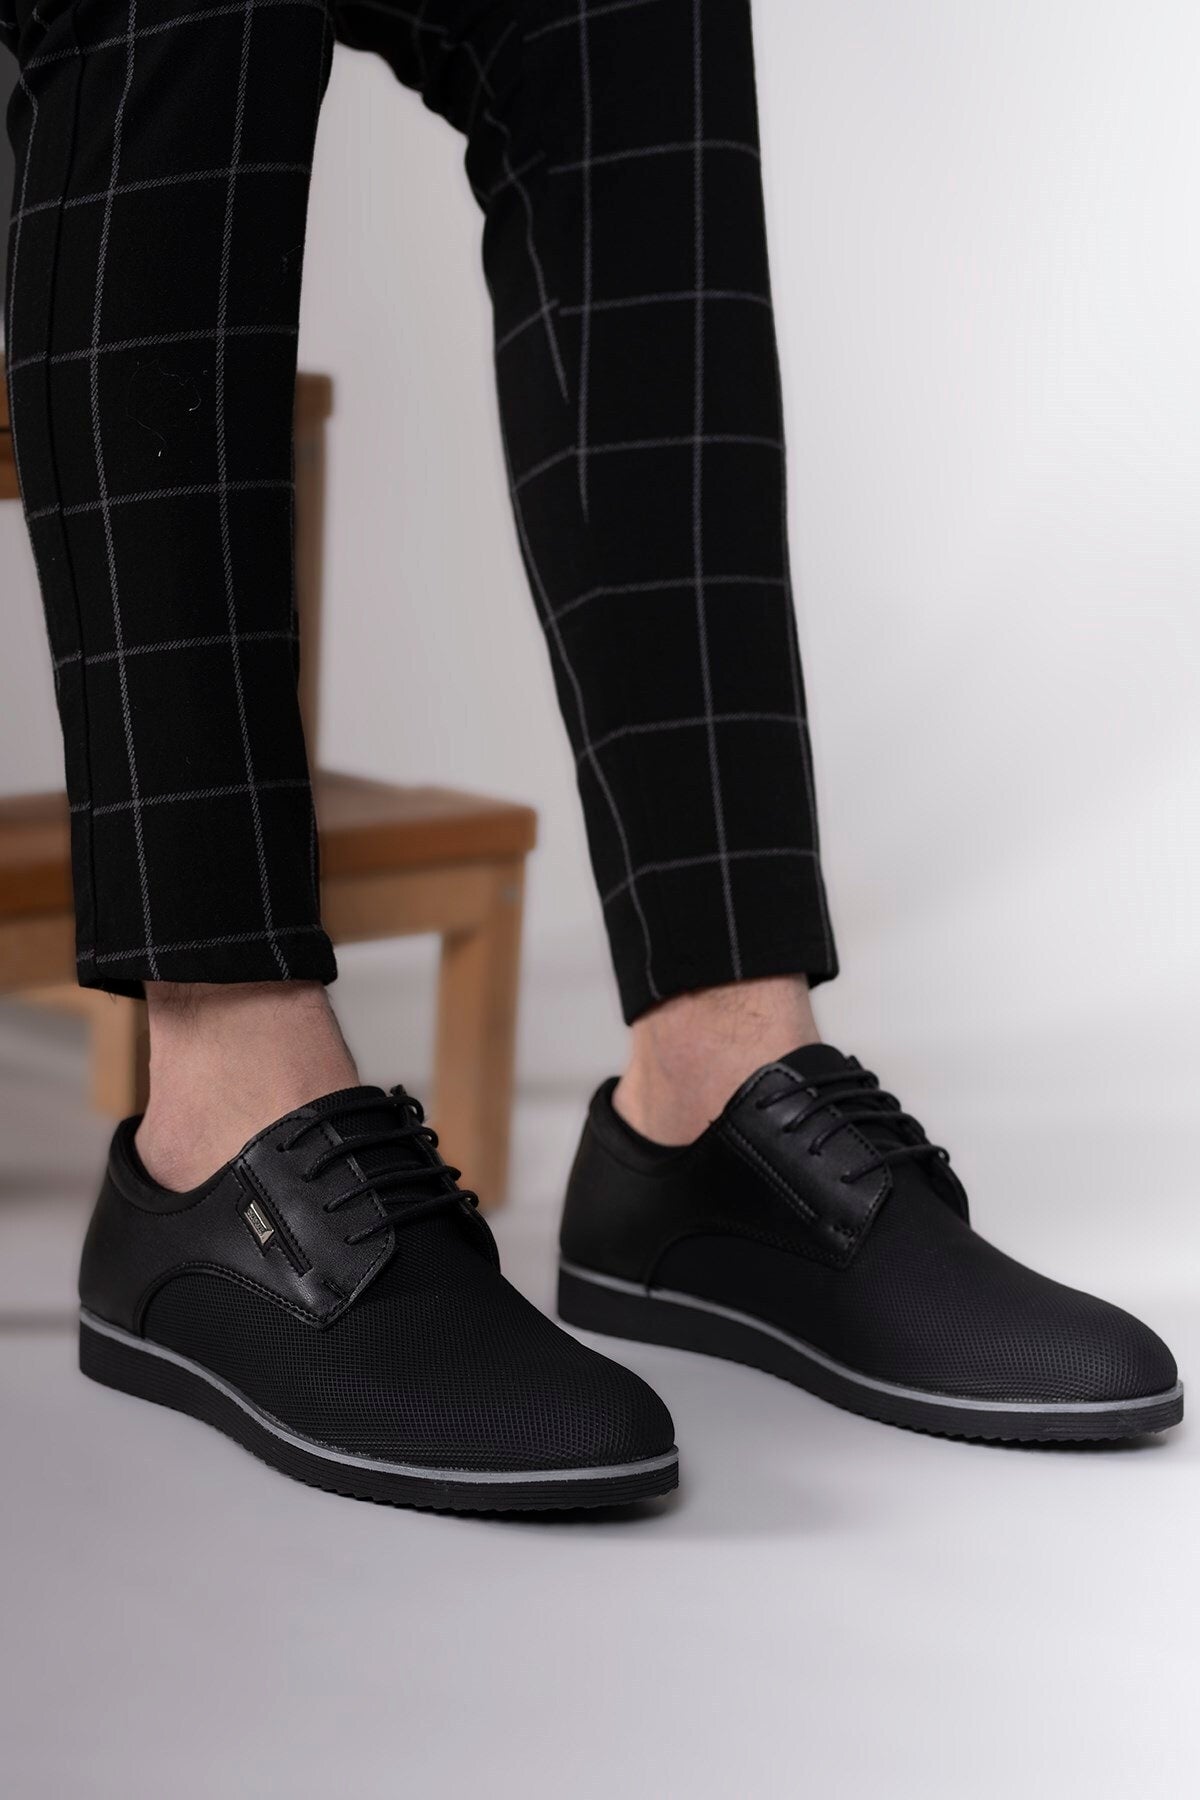 Black Printed Men's Casual Shoes 0012682